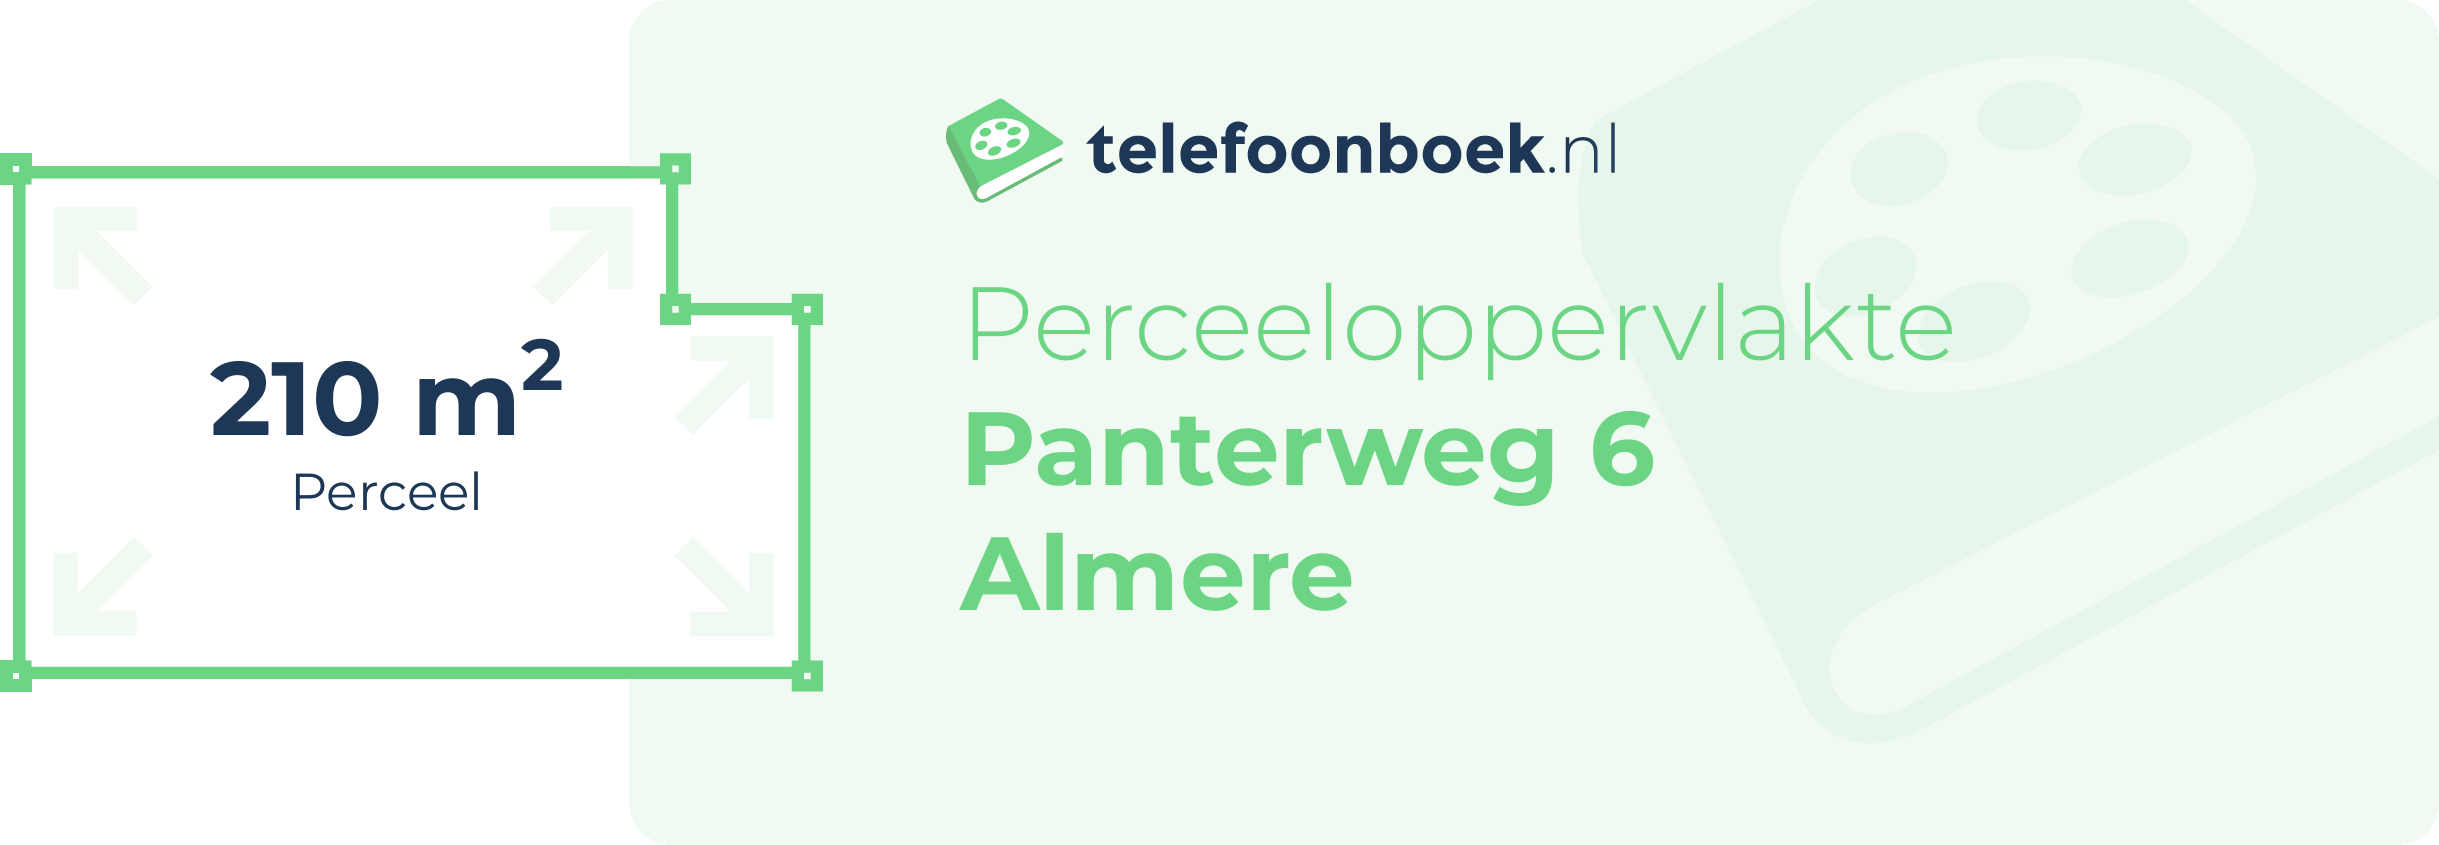 Perceeloppervlakte Panterweg 6 Almere